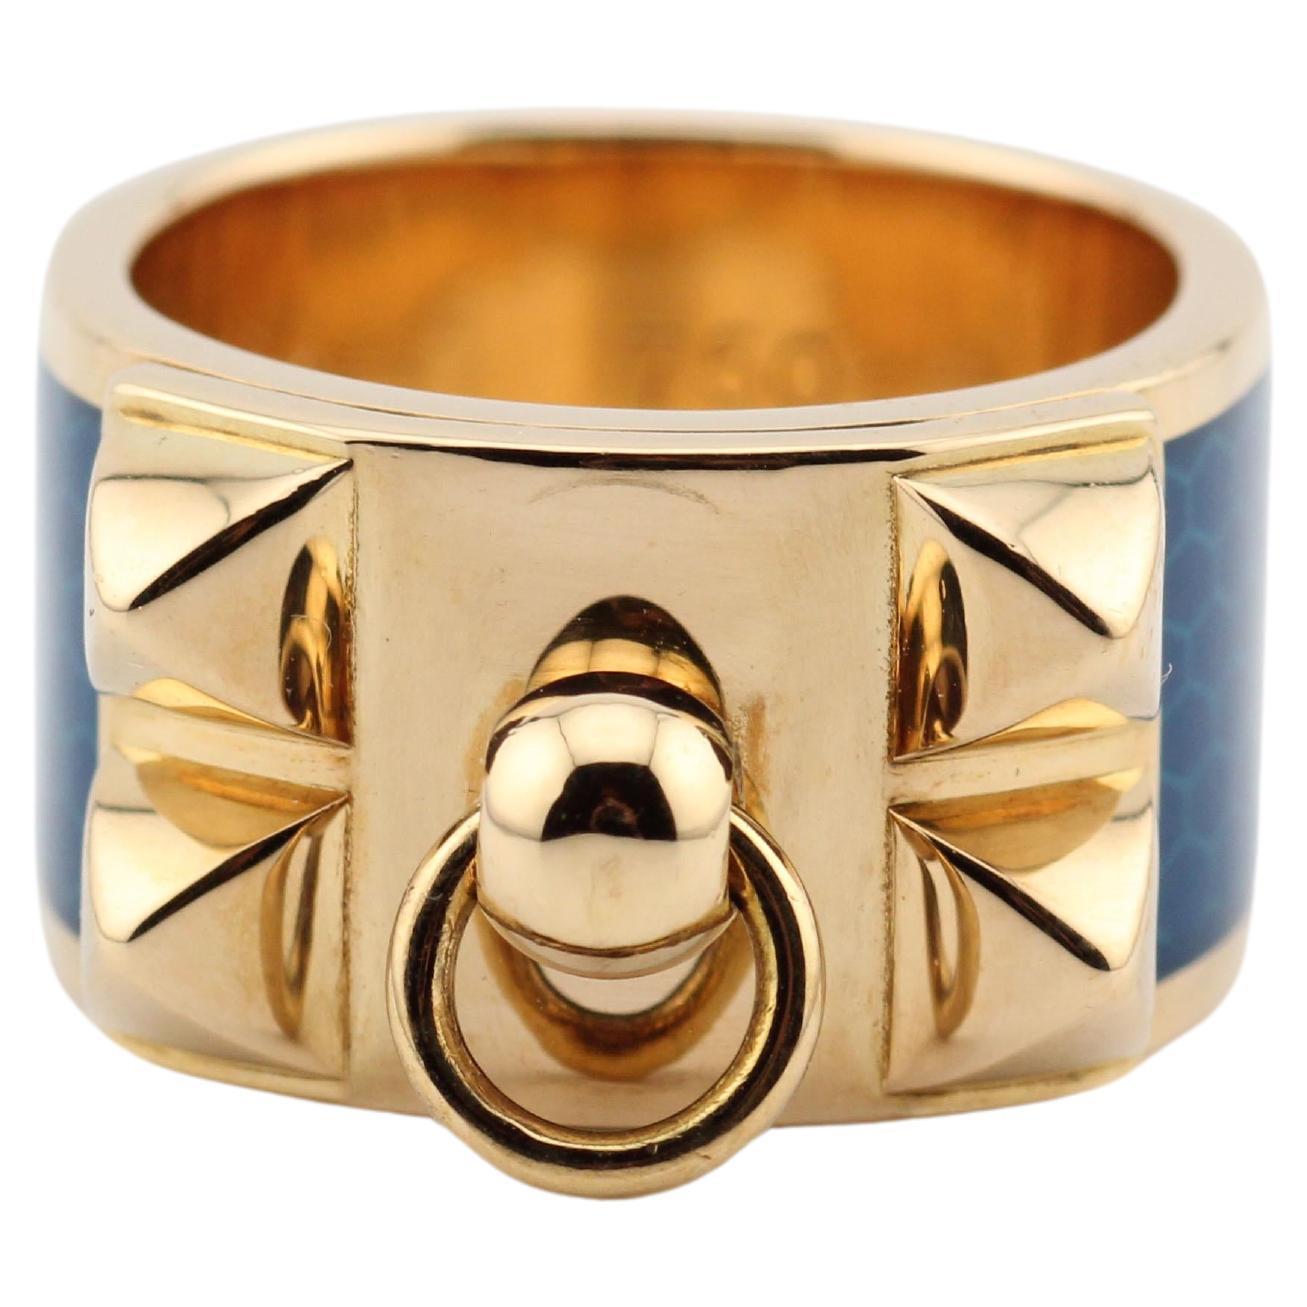 Hermes 18k Yellow Gold Collier De Chien Blue Enamel Ring Size 5 For Sale